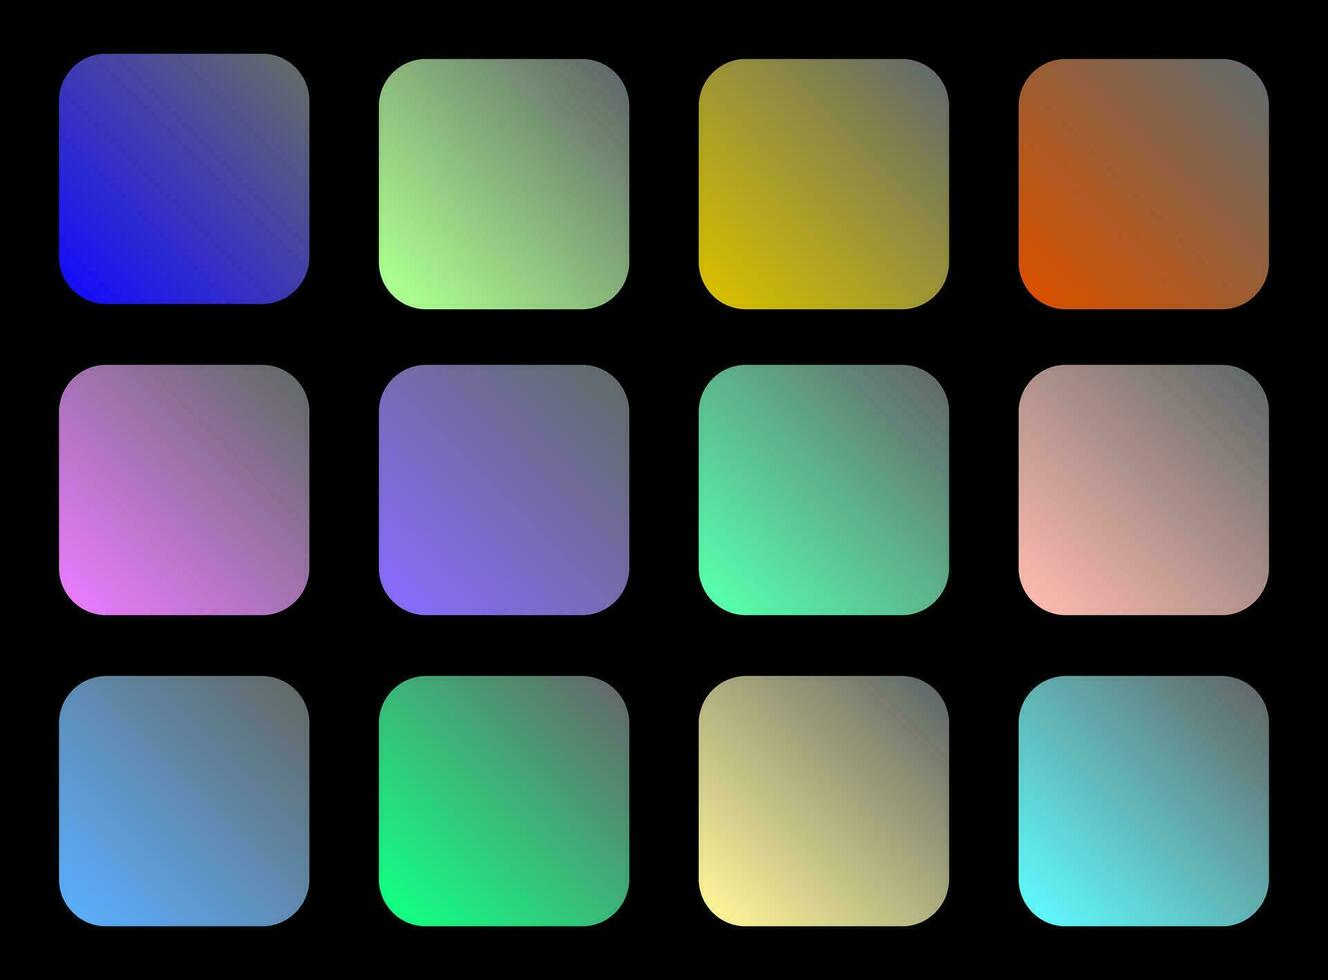 colorida nevada cor sombra linear gradiente paleta amostras rede kit arredondado quadrados modelo conjunto vetor